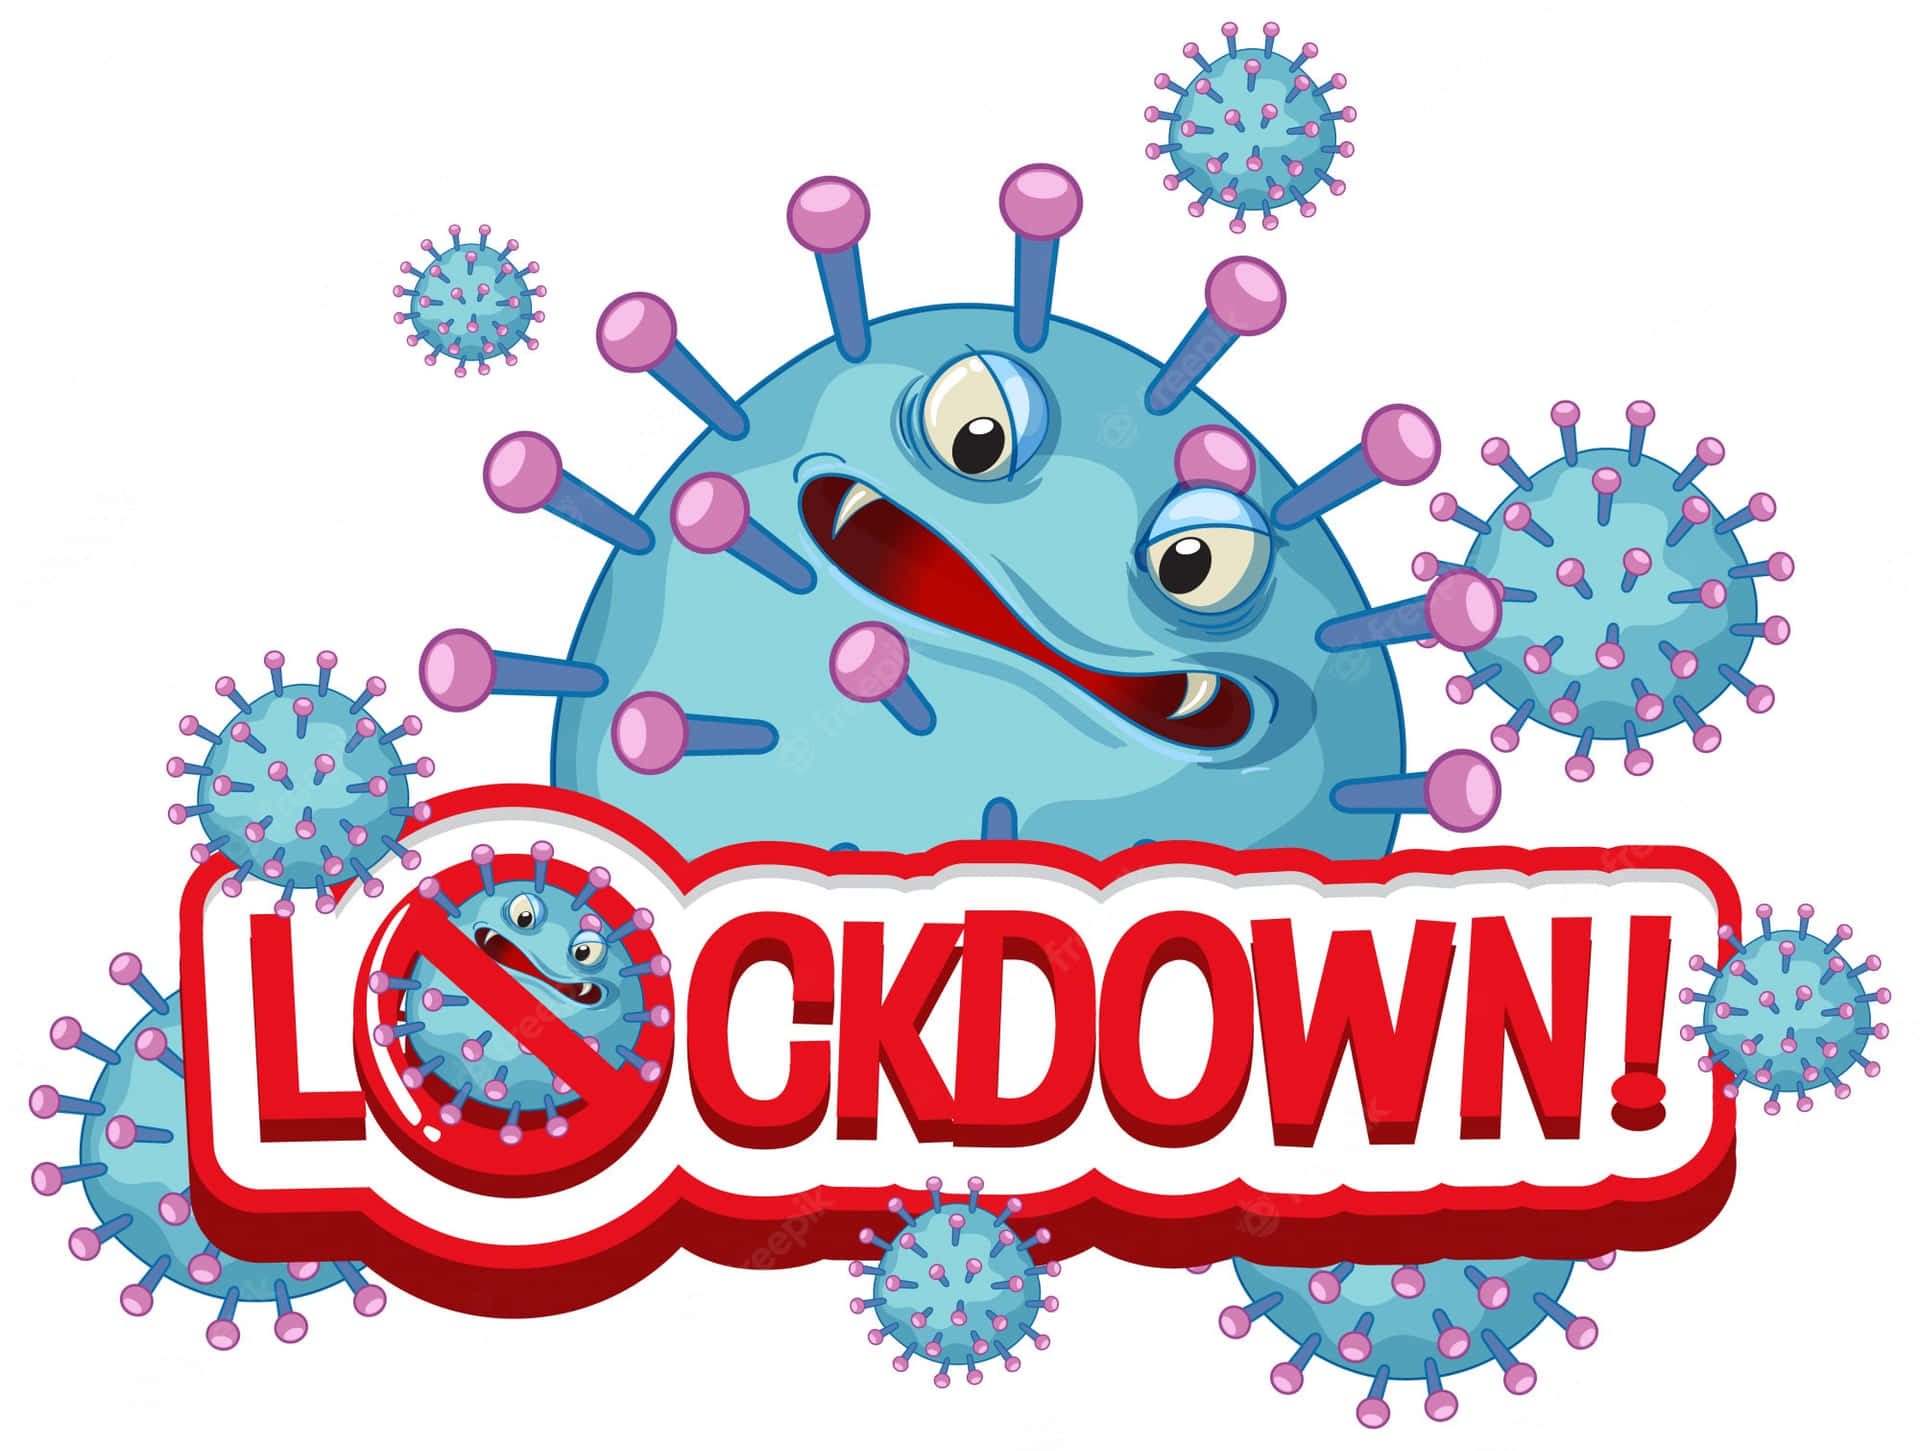 Lockdown Coronavirus Funny Drawing Background